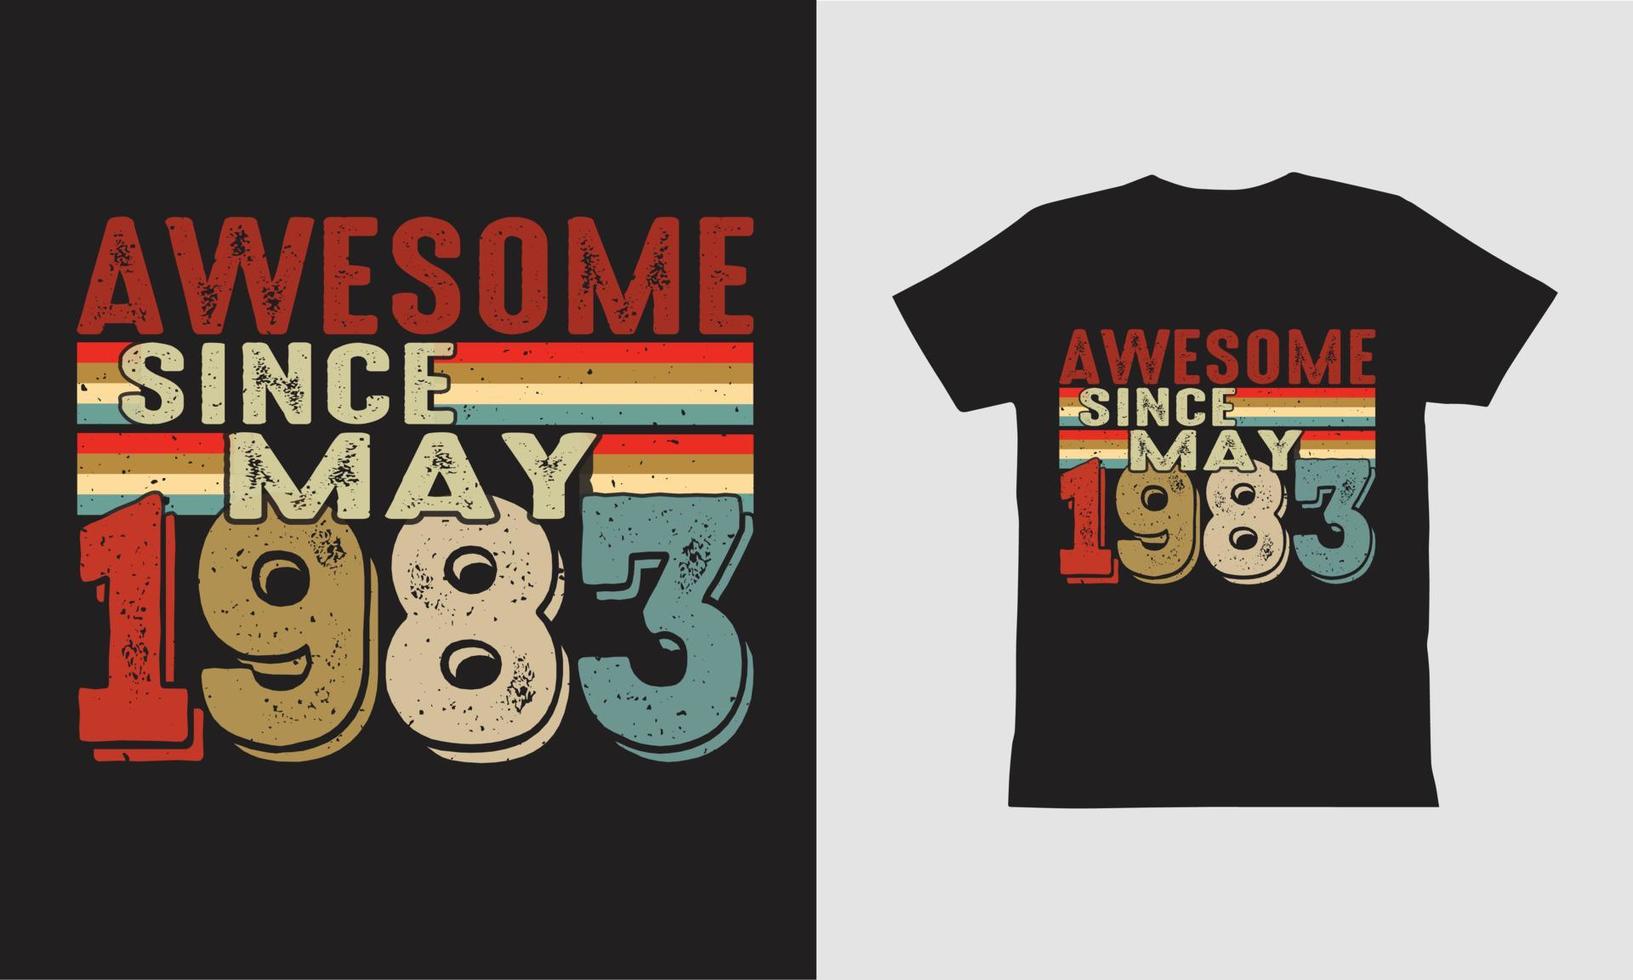 fantastisk sedan juni 1983 t-shirt design. vektor